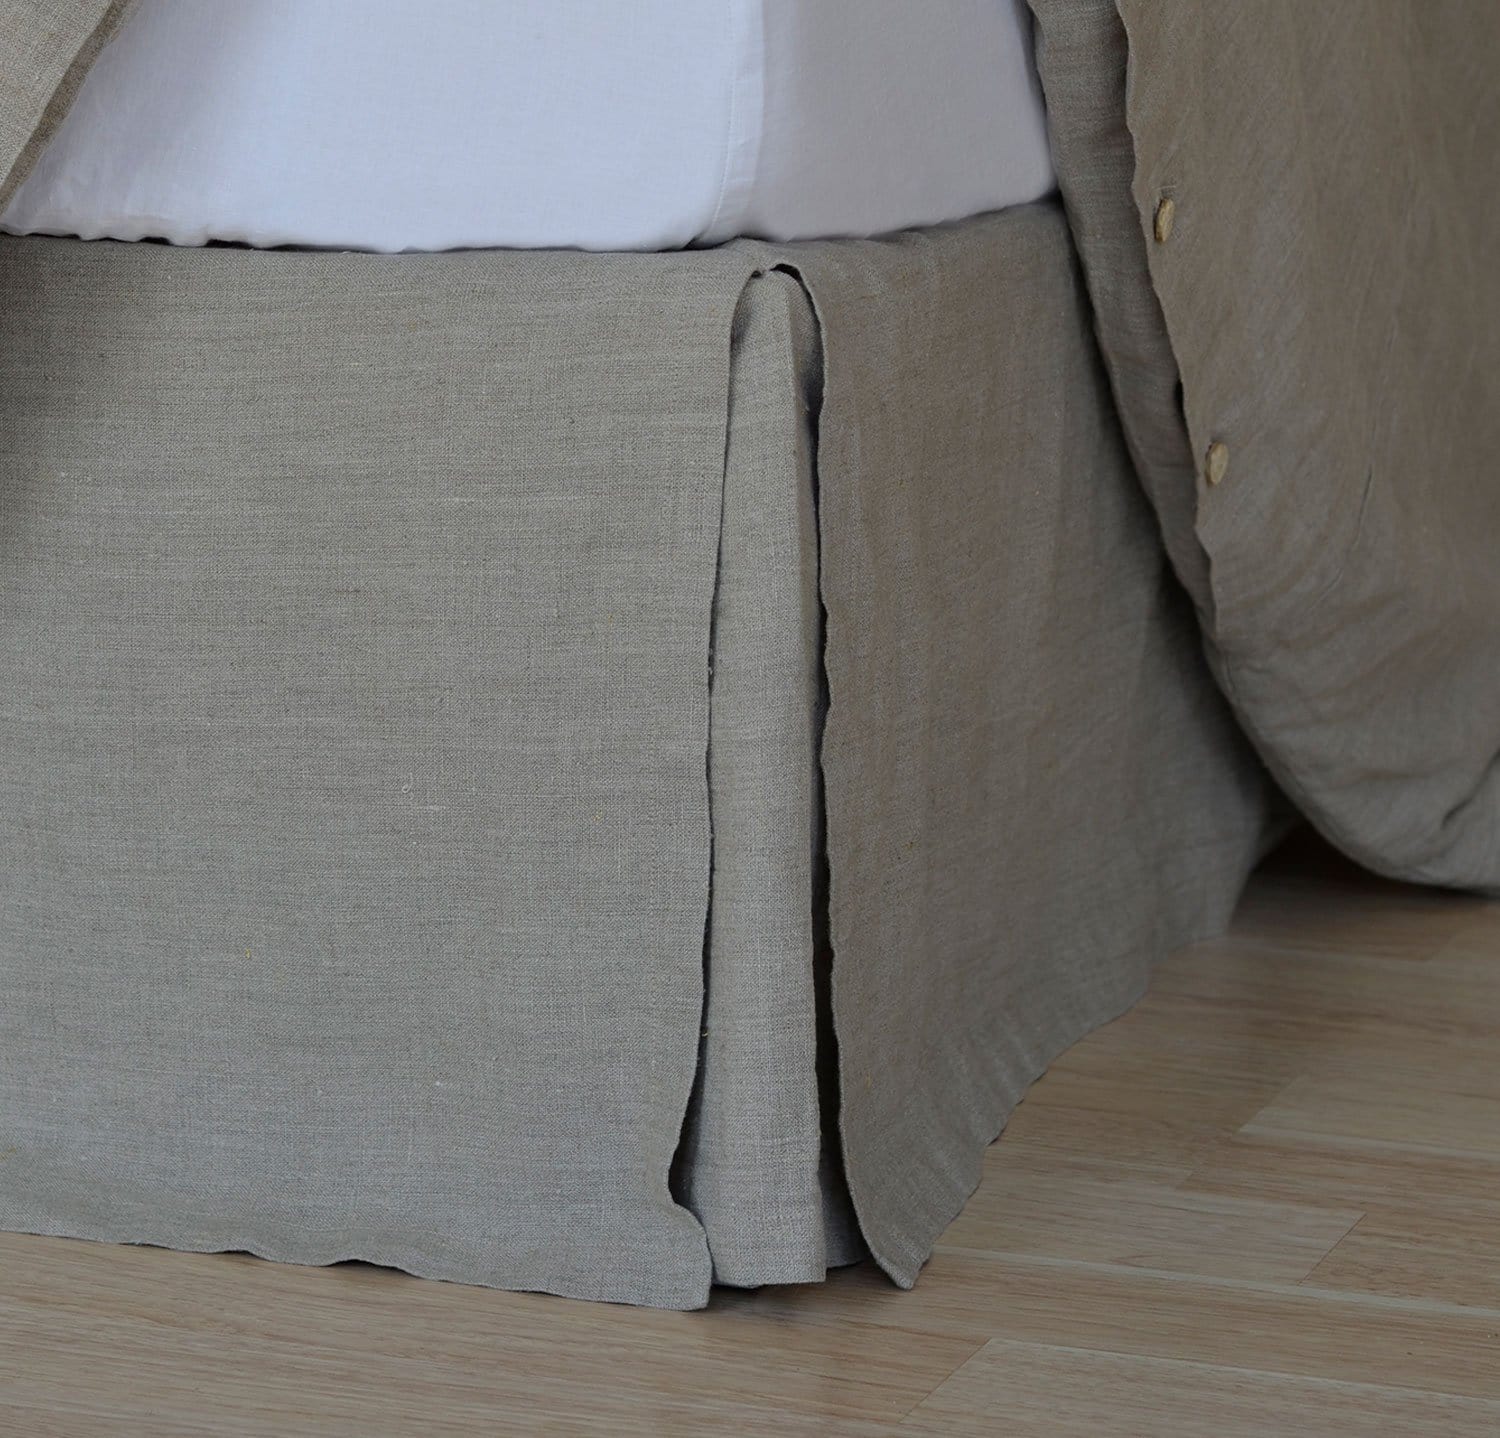 bed detail of 100% linen bedskirt heavyweight Orkney linen fabric natural light brown beige tan color